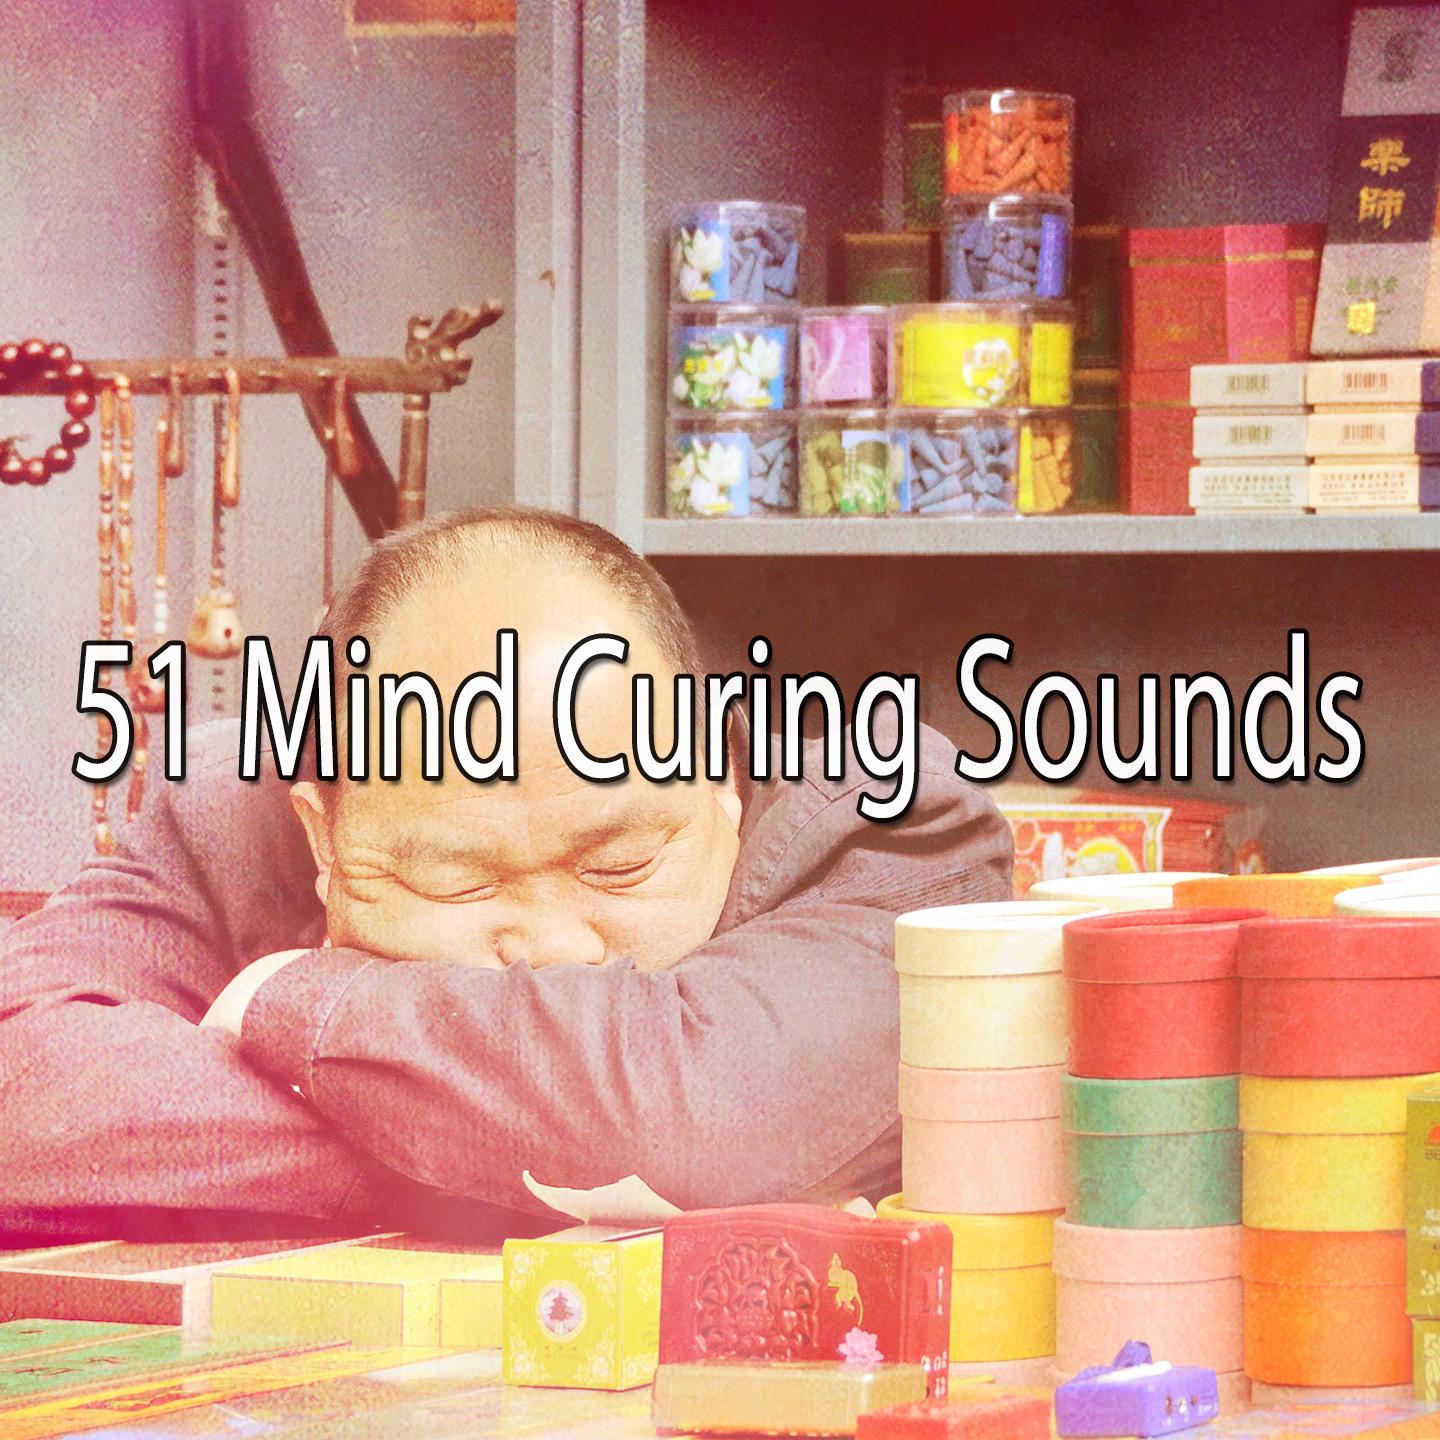 51 Mind Curing Sounds